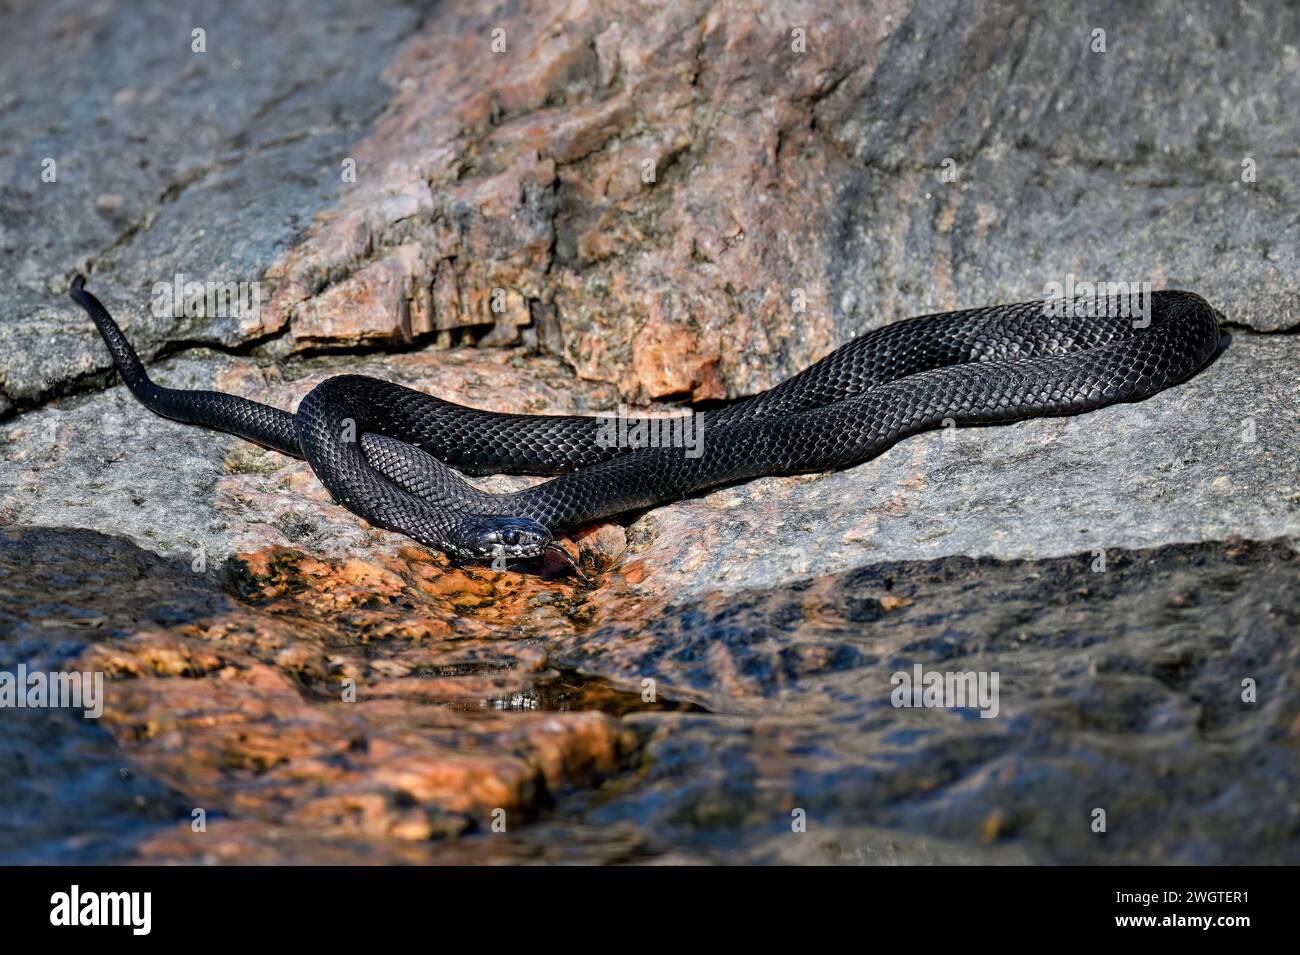 Grass snake basking on the rock crack Stock Photo